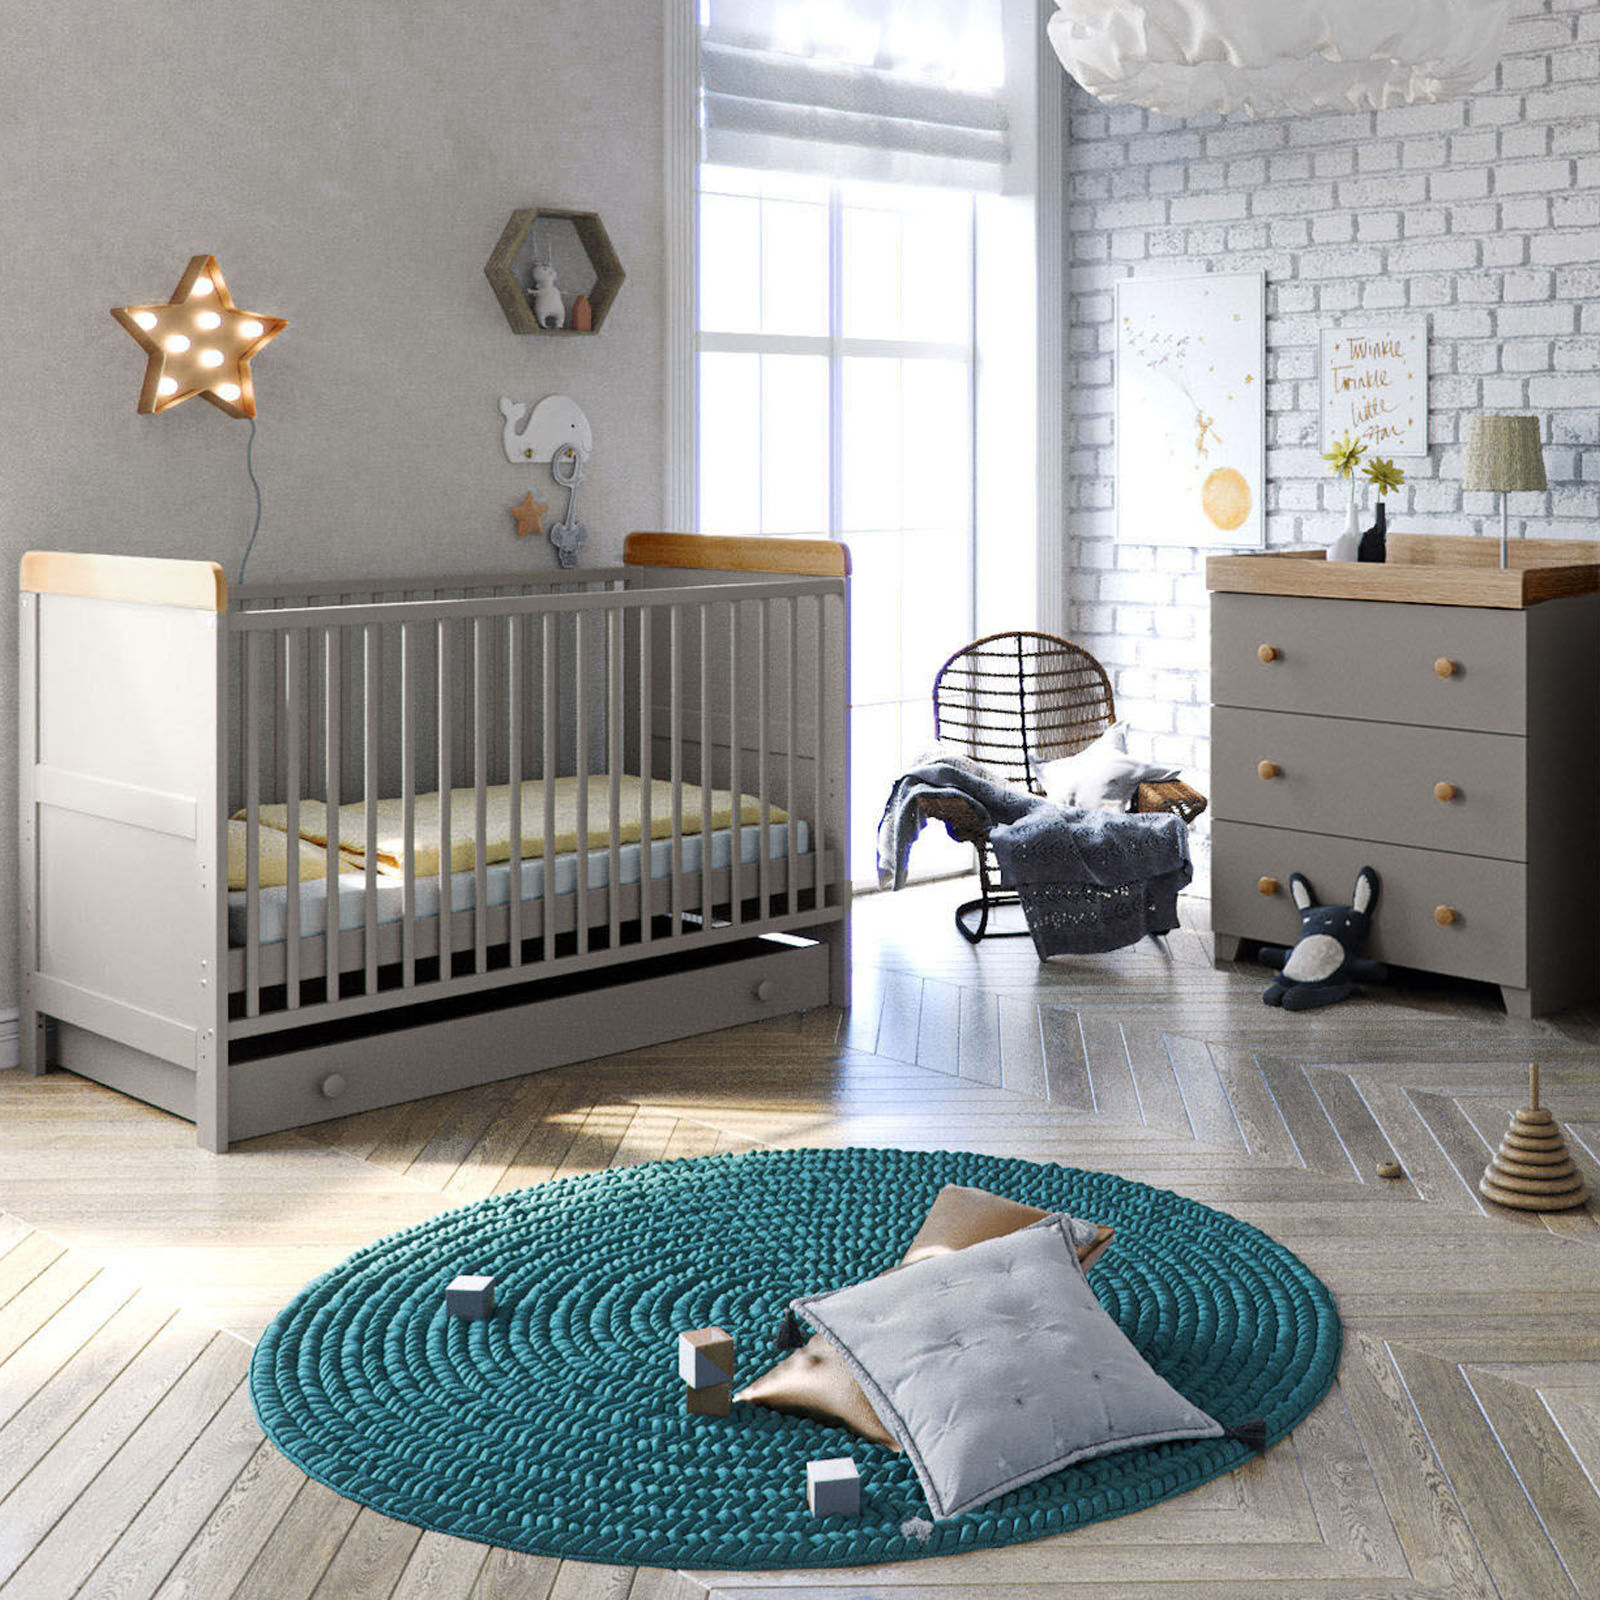 Little Acorns Classic Milano Cot Bed 3 Piece Nursery Furniture Set - Grey / Oak